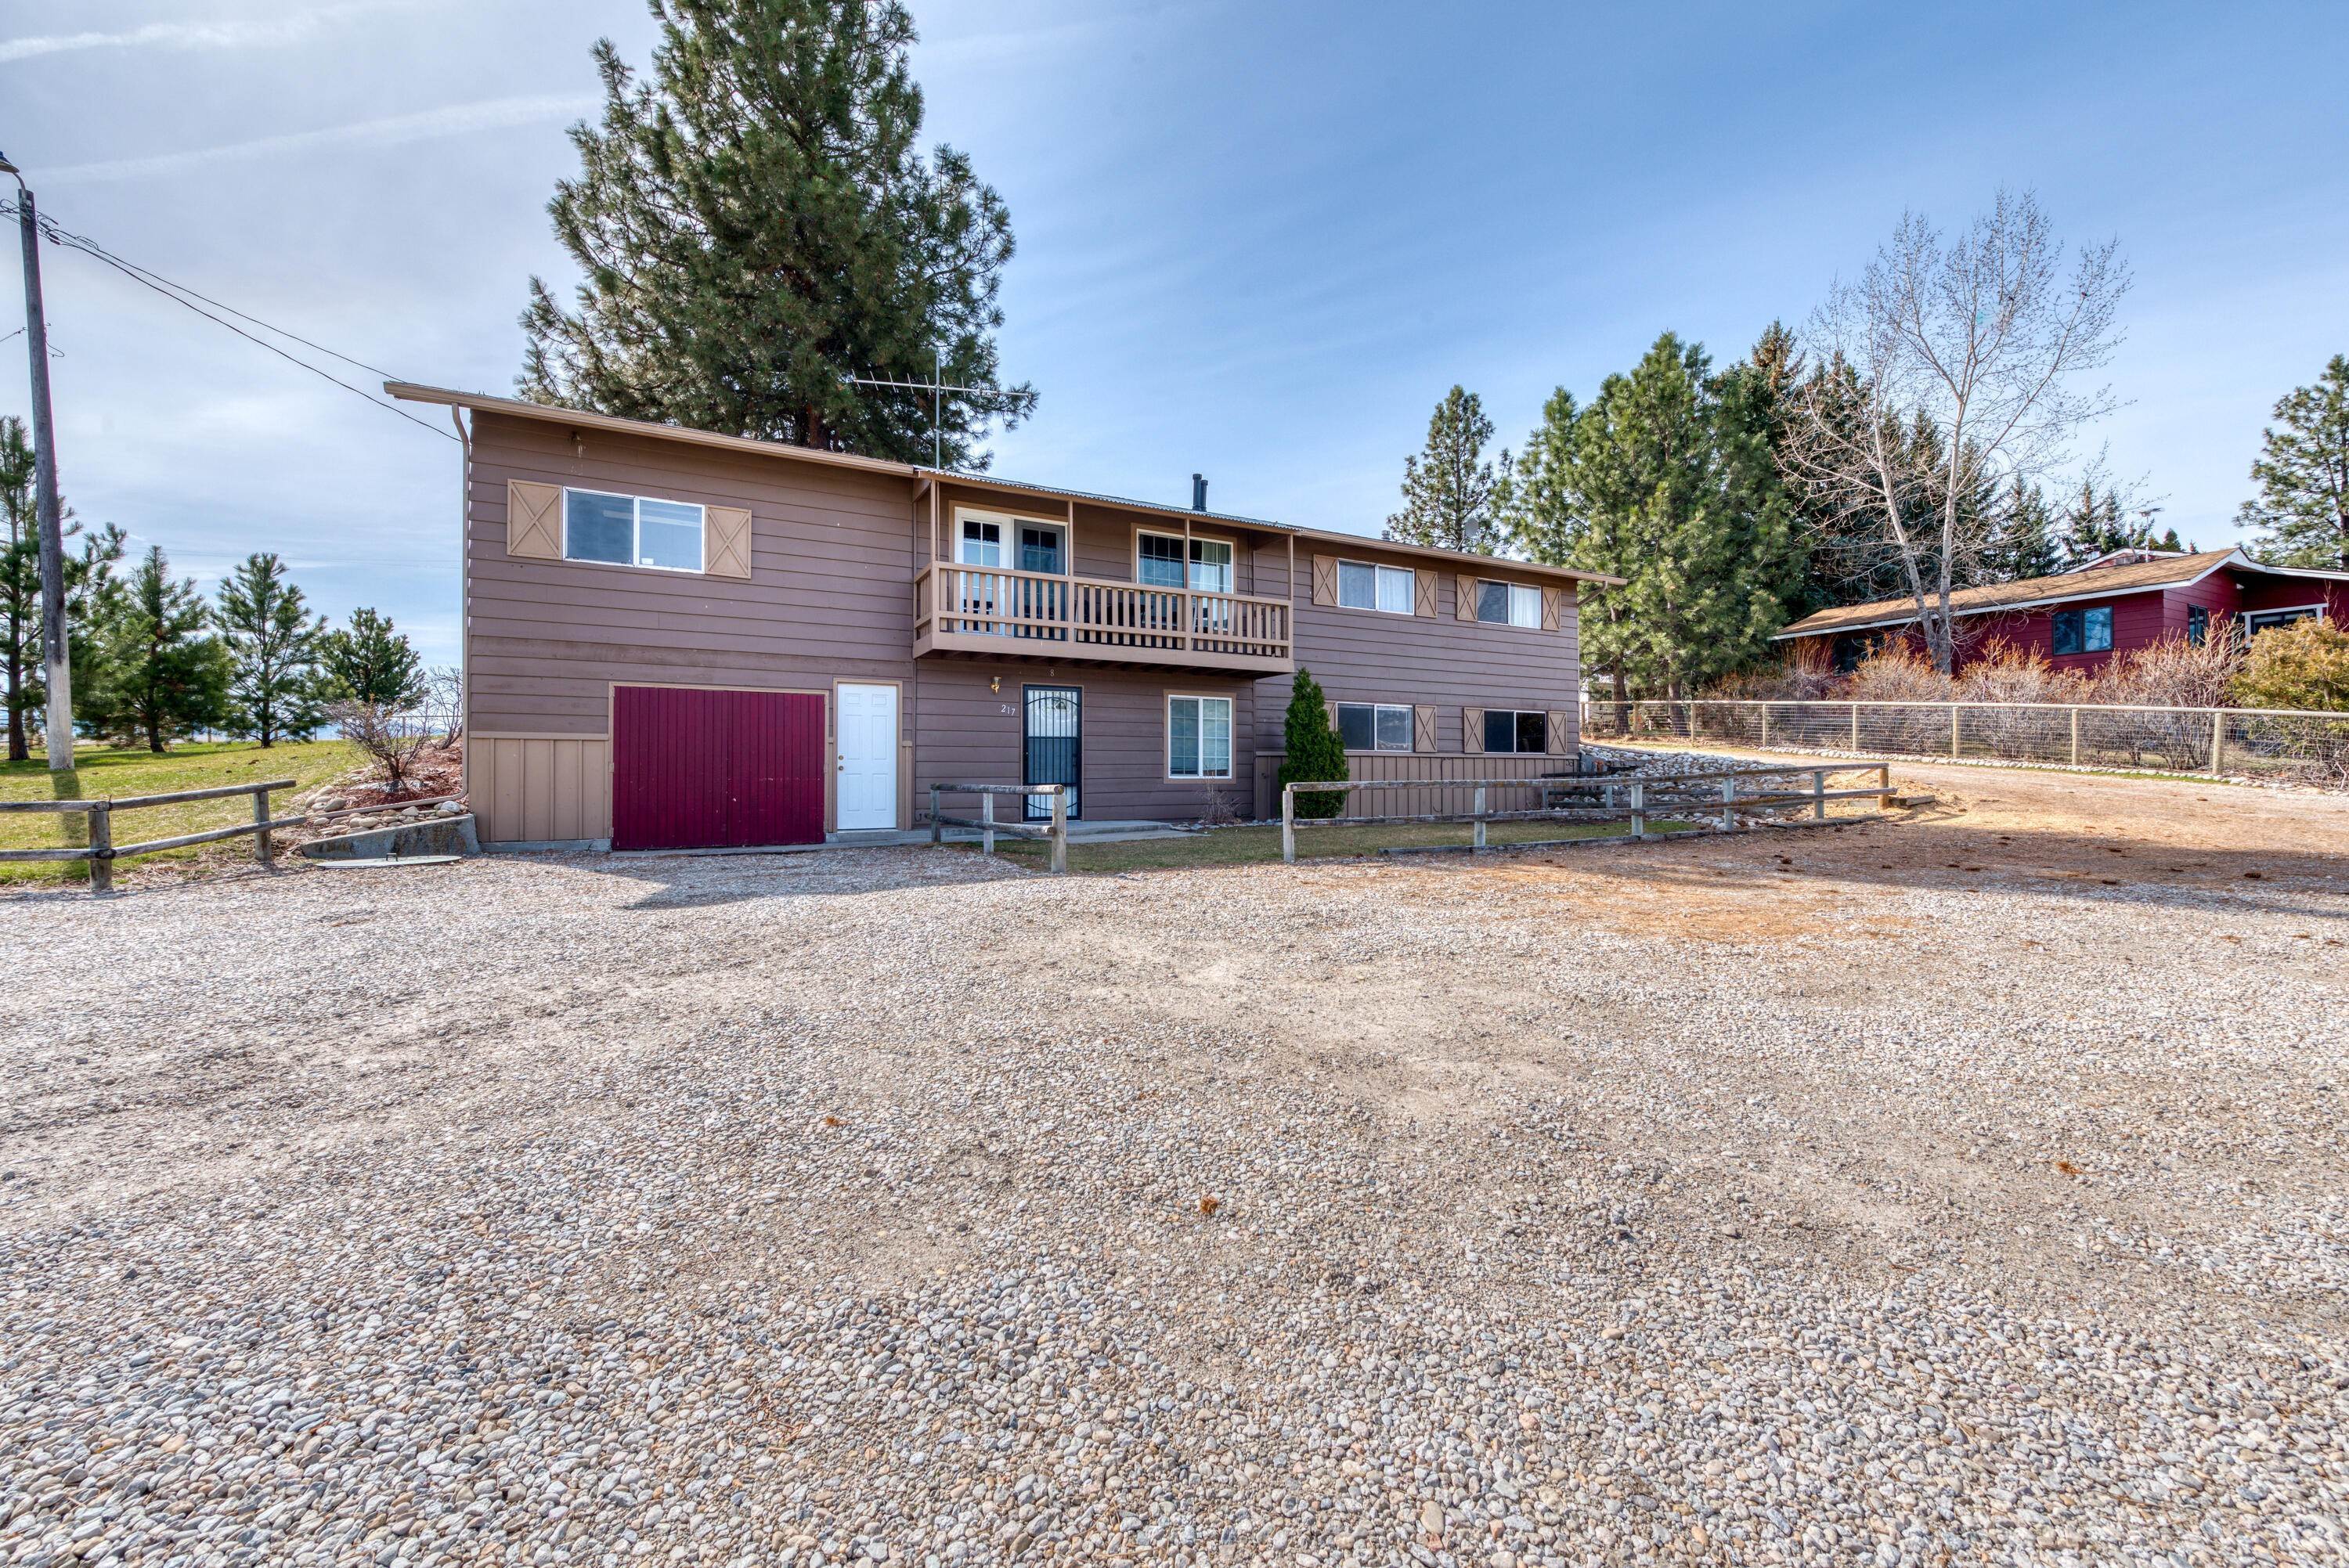 9. Multi-Family Homes for Sale at 215-233 Mockingbird Hill, Hamilton, Montana 59840 United States